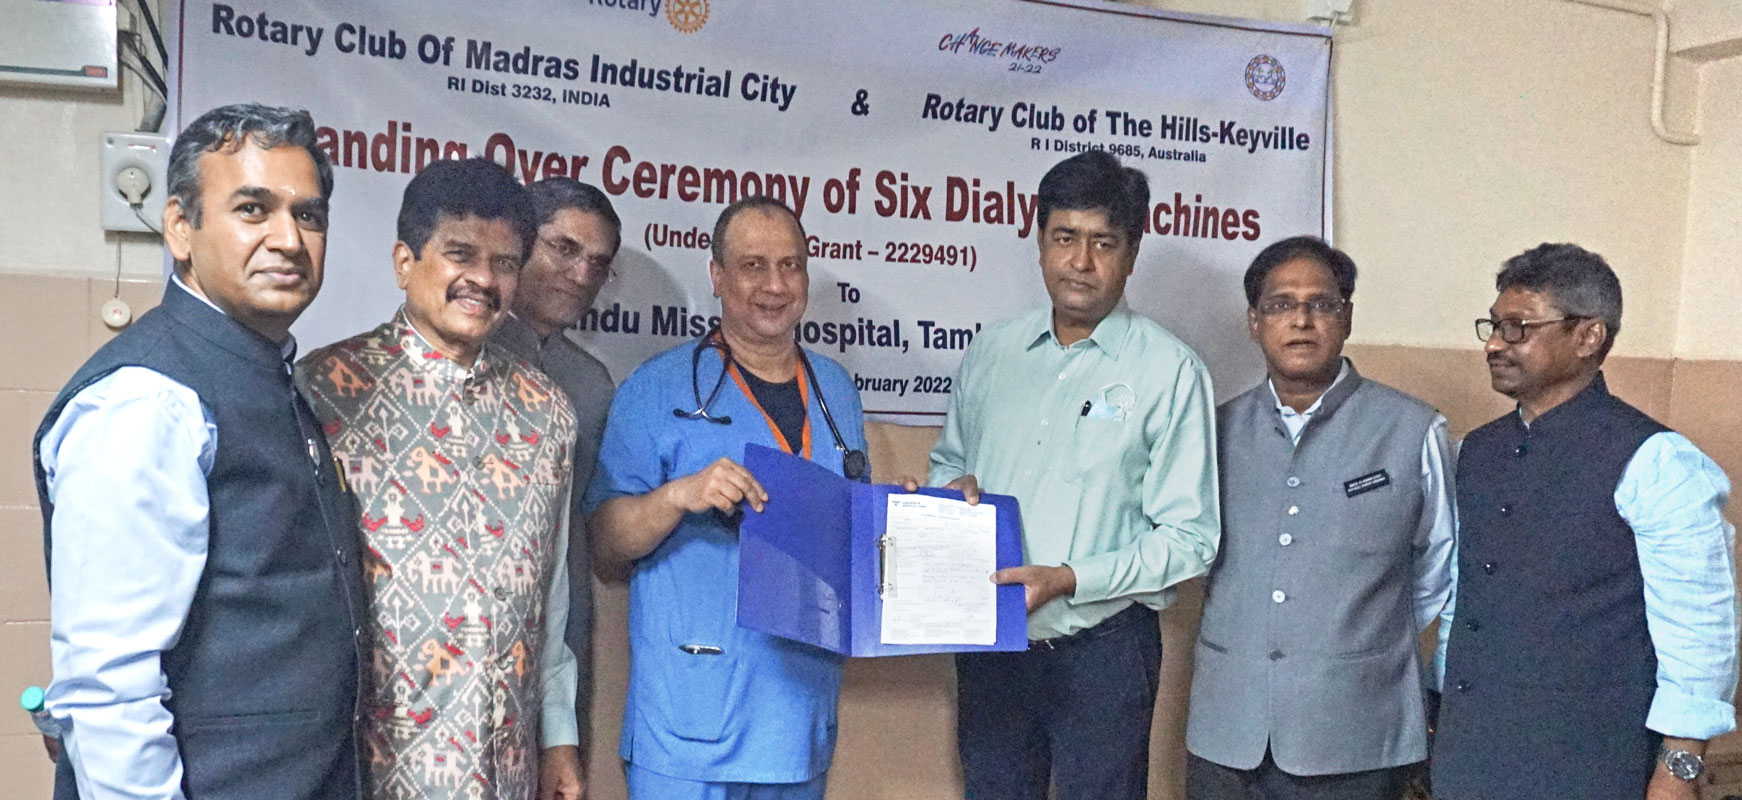 RID Venkatesh gives the warranty agreement for dialysis machines to Hindu Mission Hospital medical director Dr D K Sriram in the presence of (from L) club president Satheesh Kumar, Vinod Saraogi, DRFC Ambalavanan, DG Sridhar and district secretary R Ravi Shankar. 